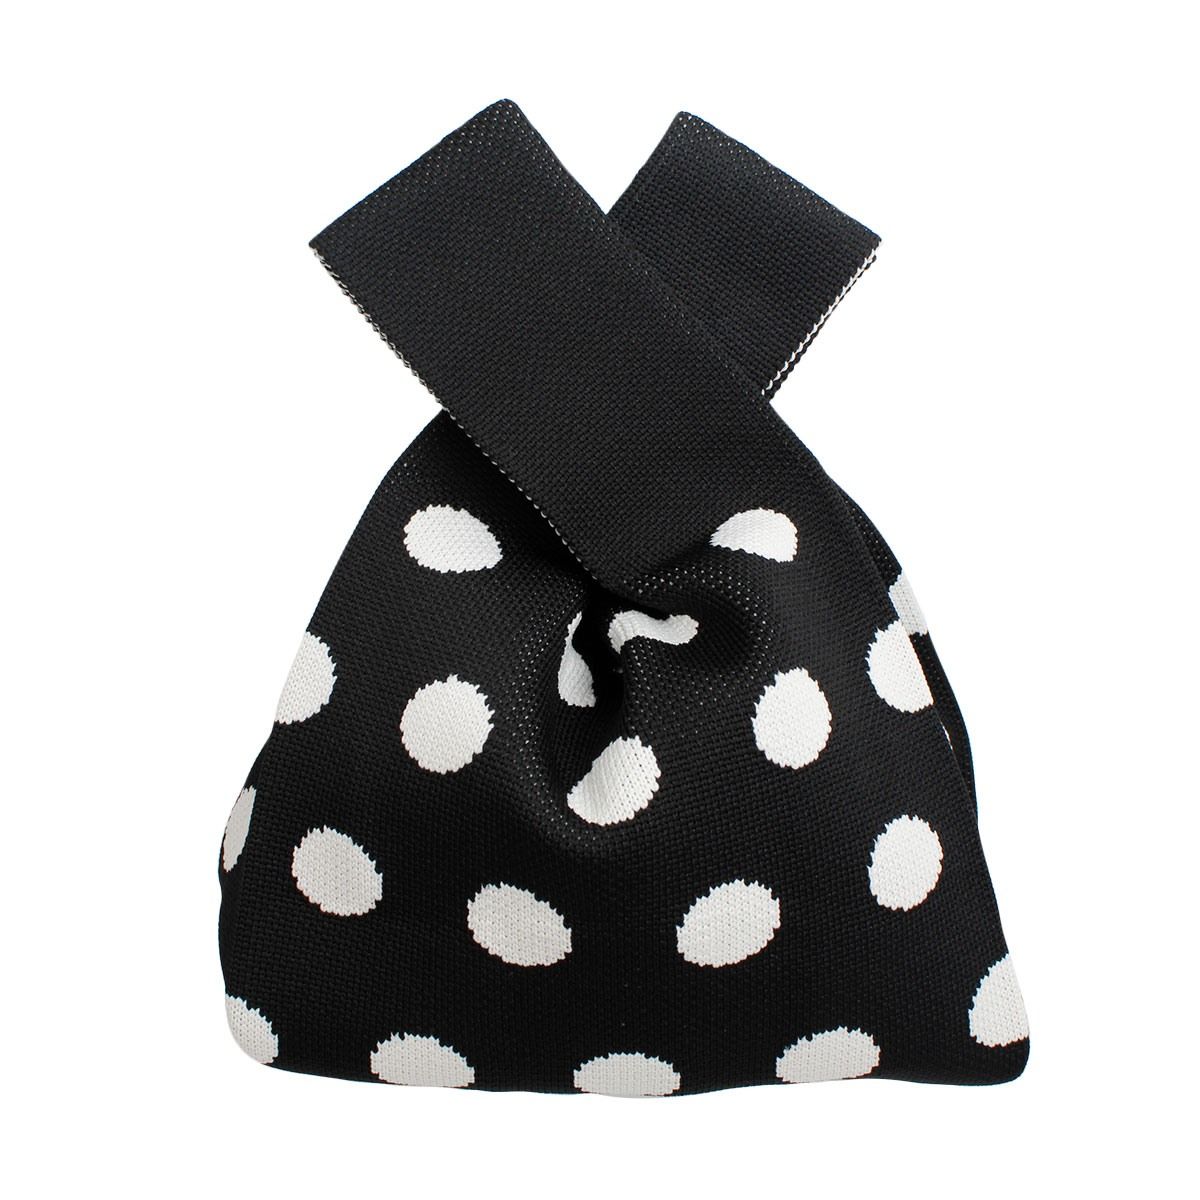 Purse Black Polka Dot Handbag For Women